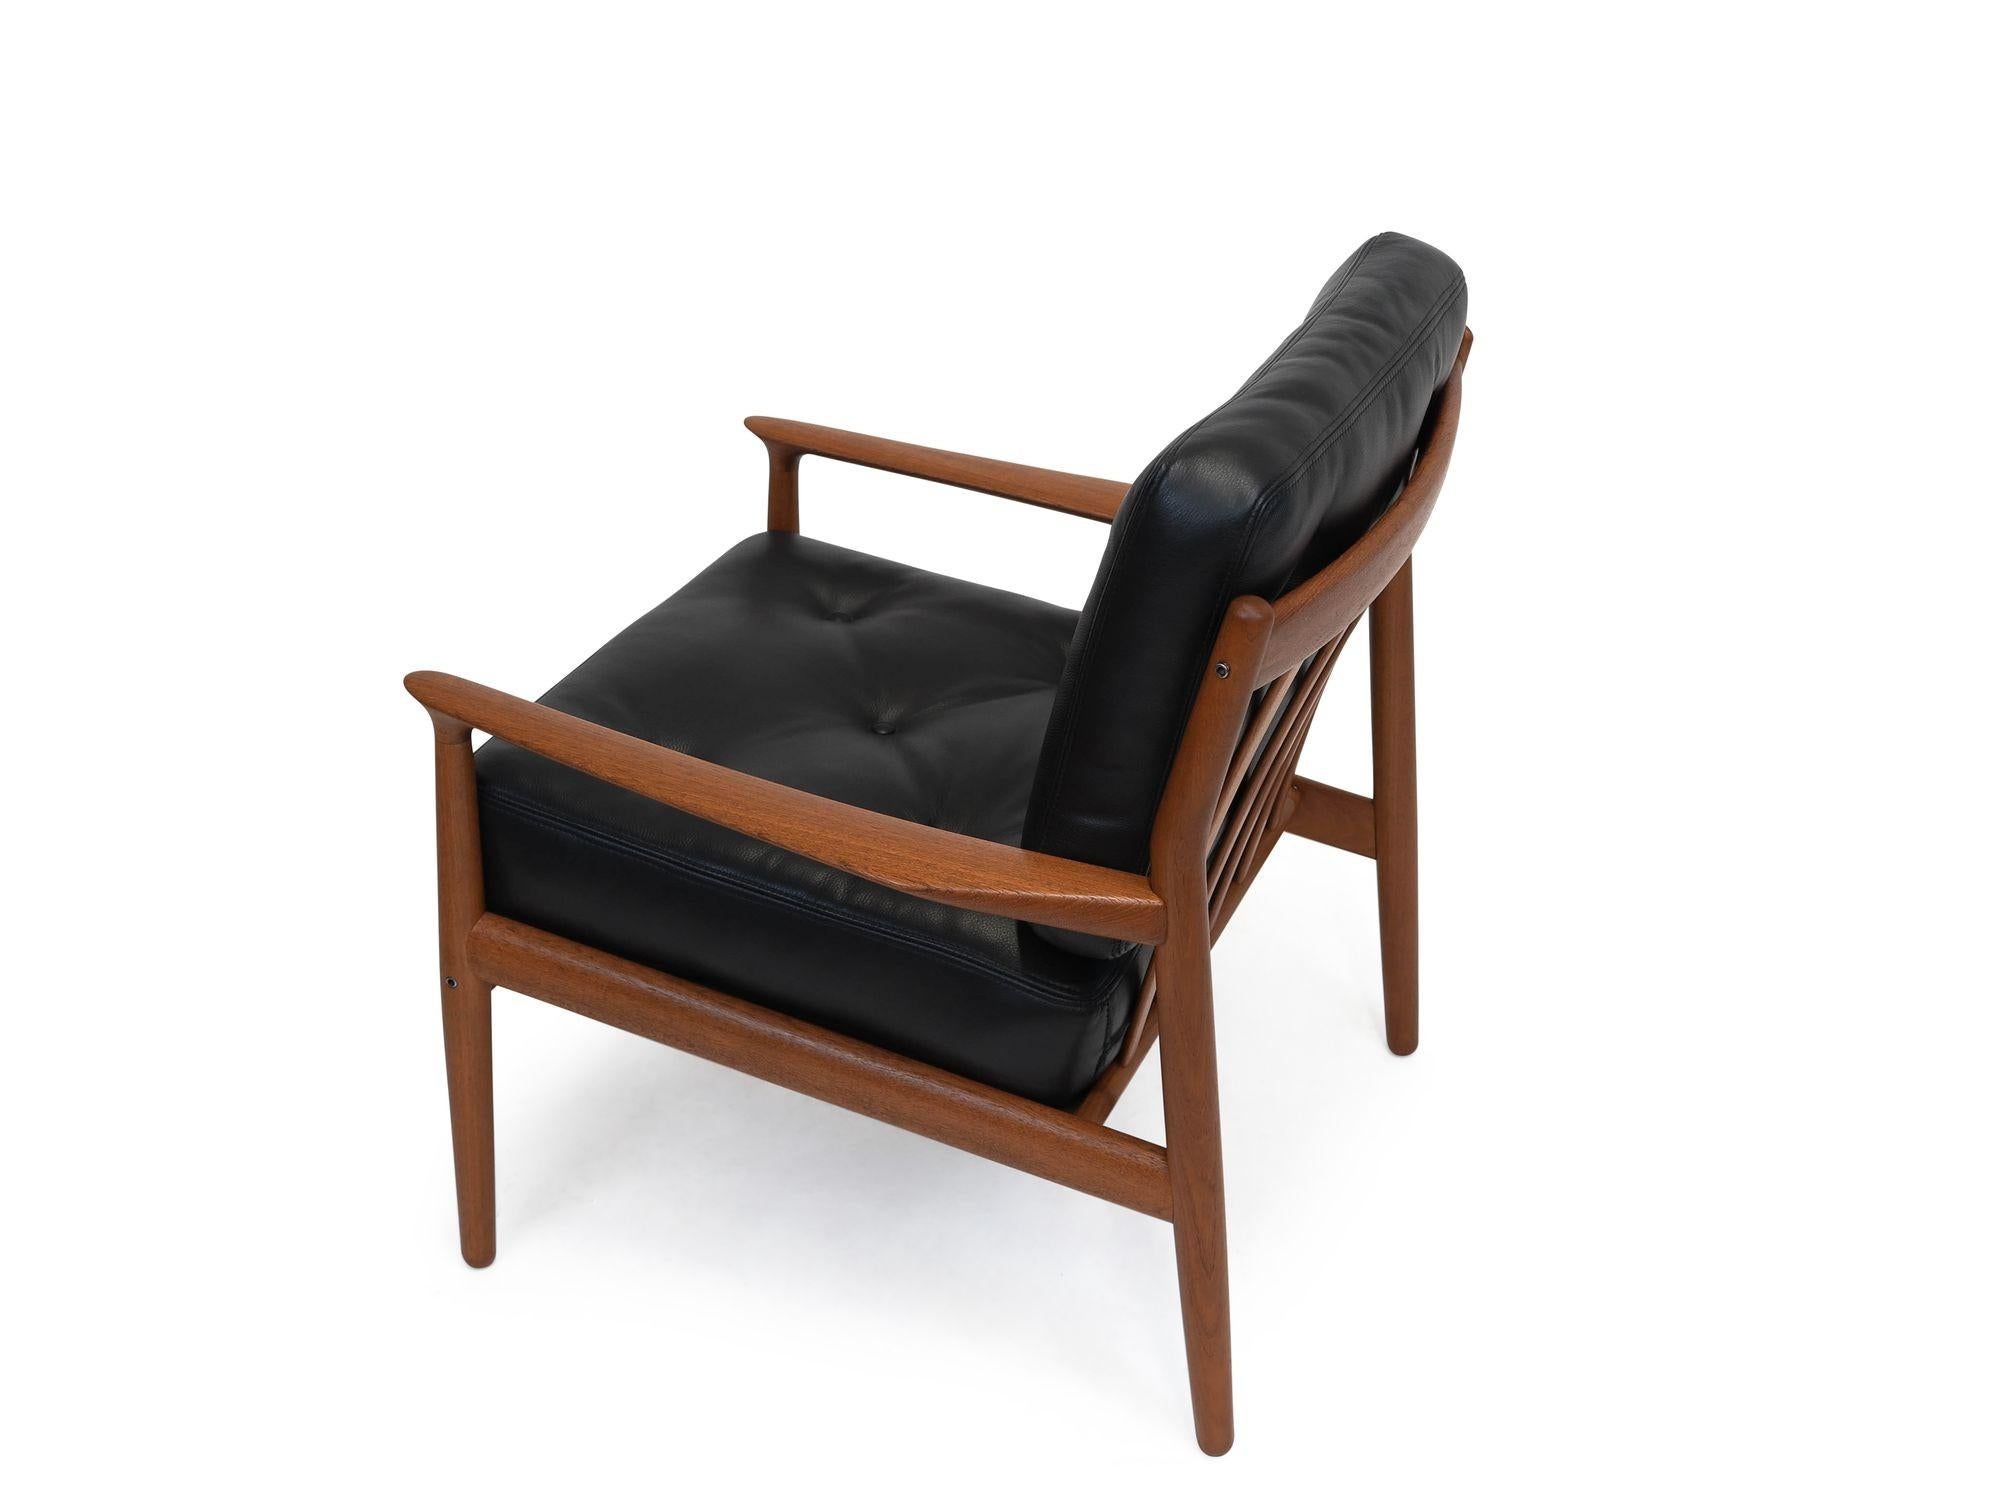 20th Century Grete Jalk Danish Teak Lounge Chairs in Black Leather